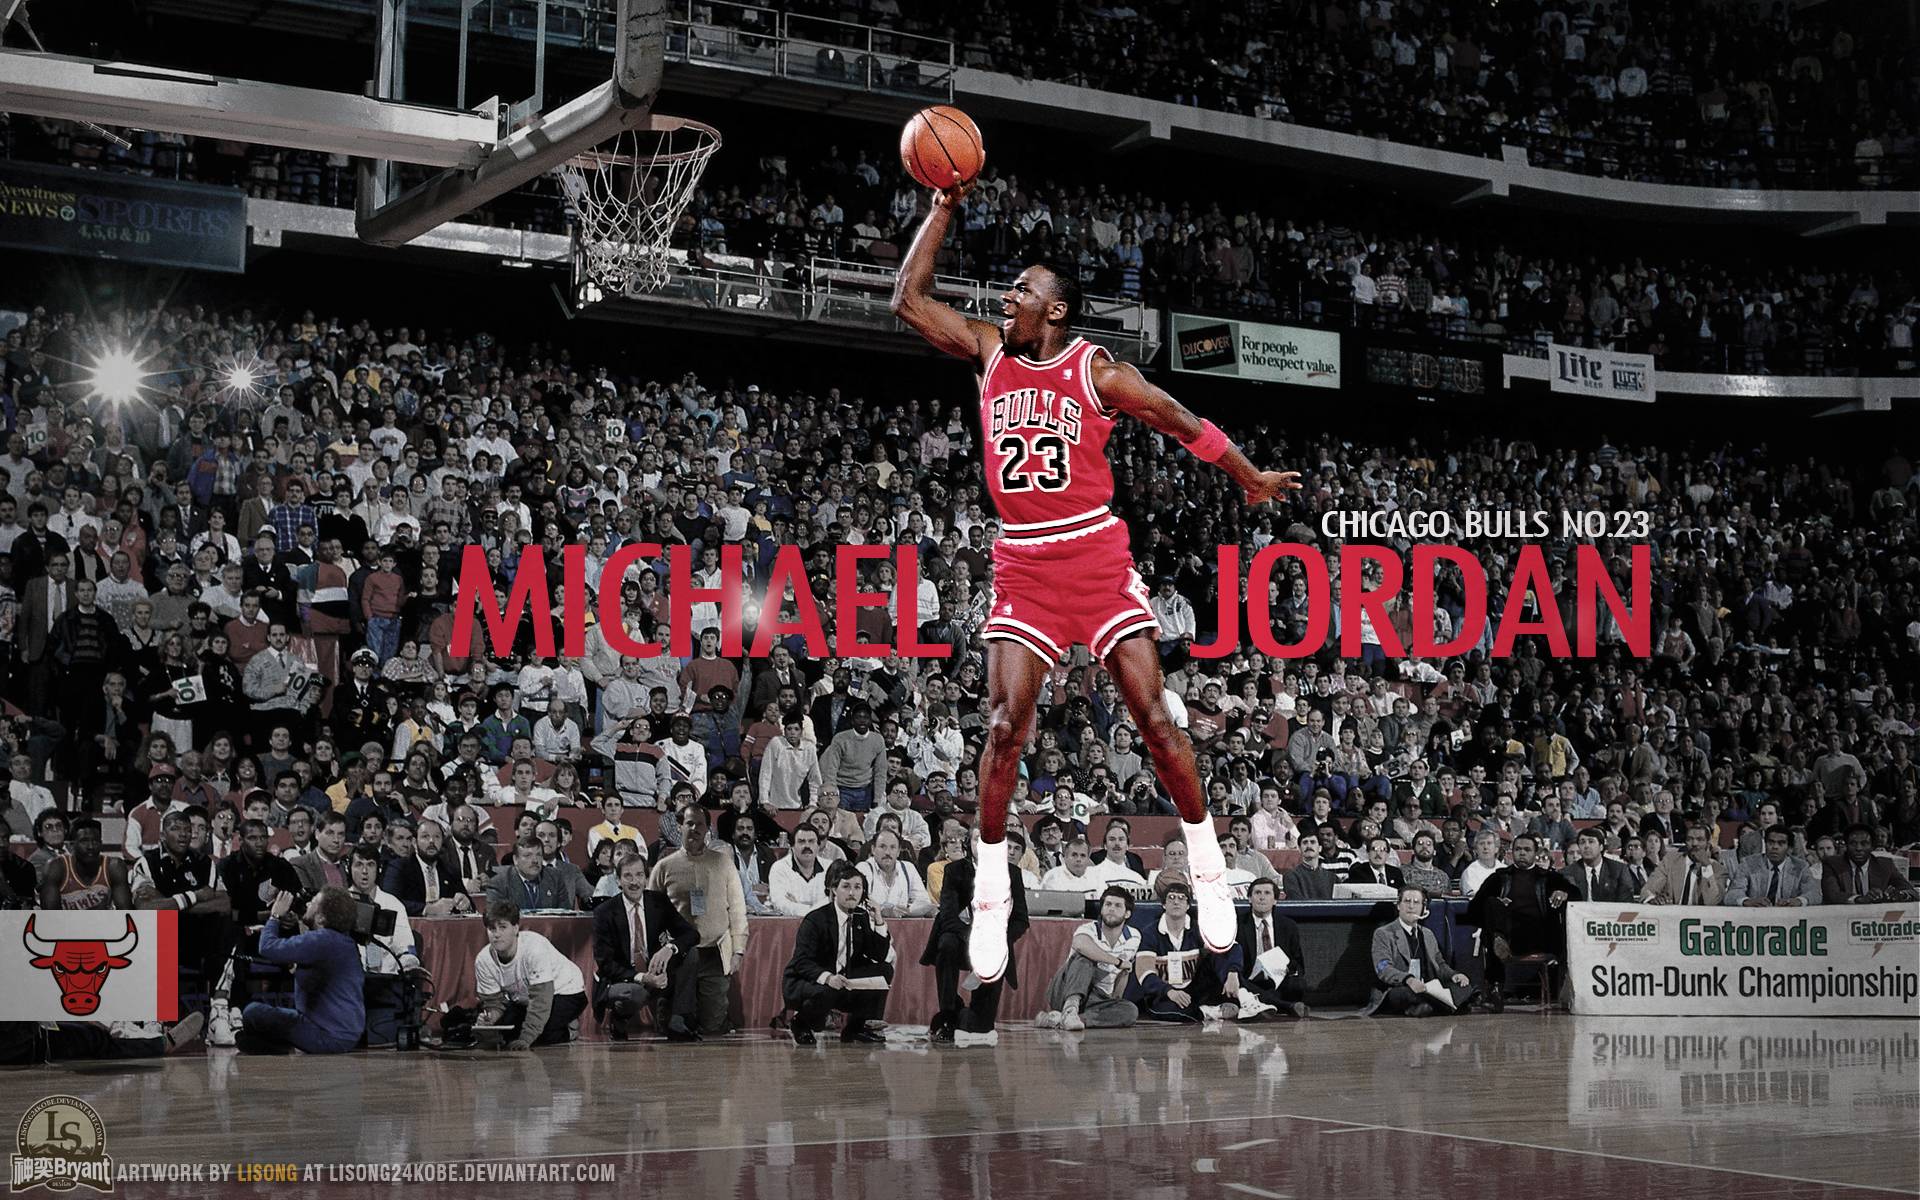 Michael Jordan Dunks From The Free Throw Line